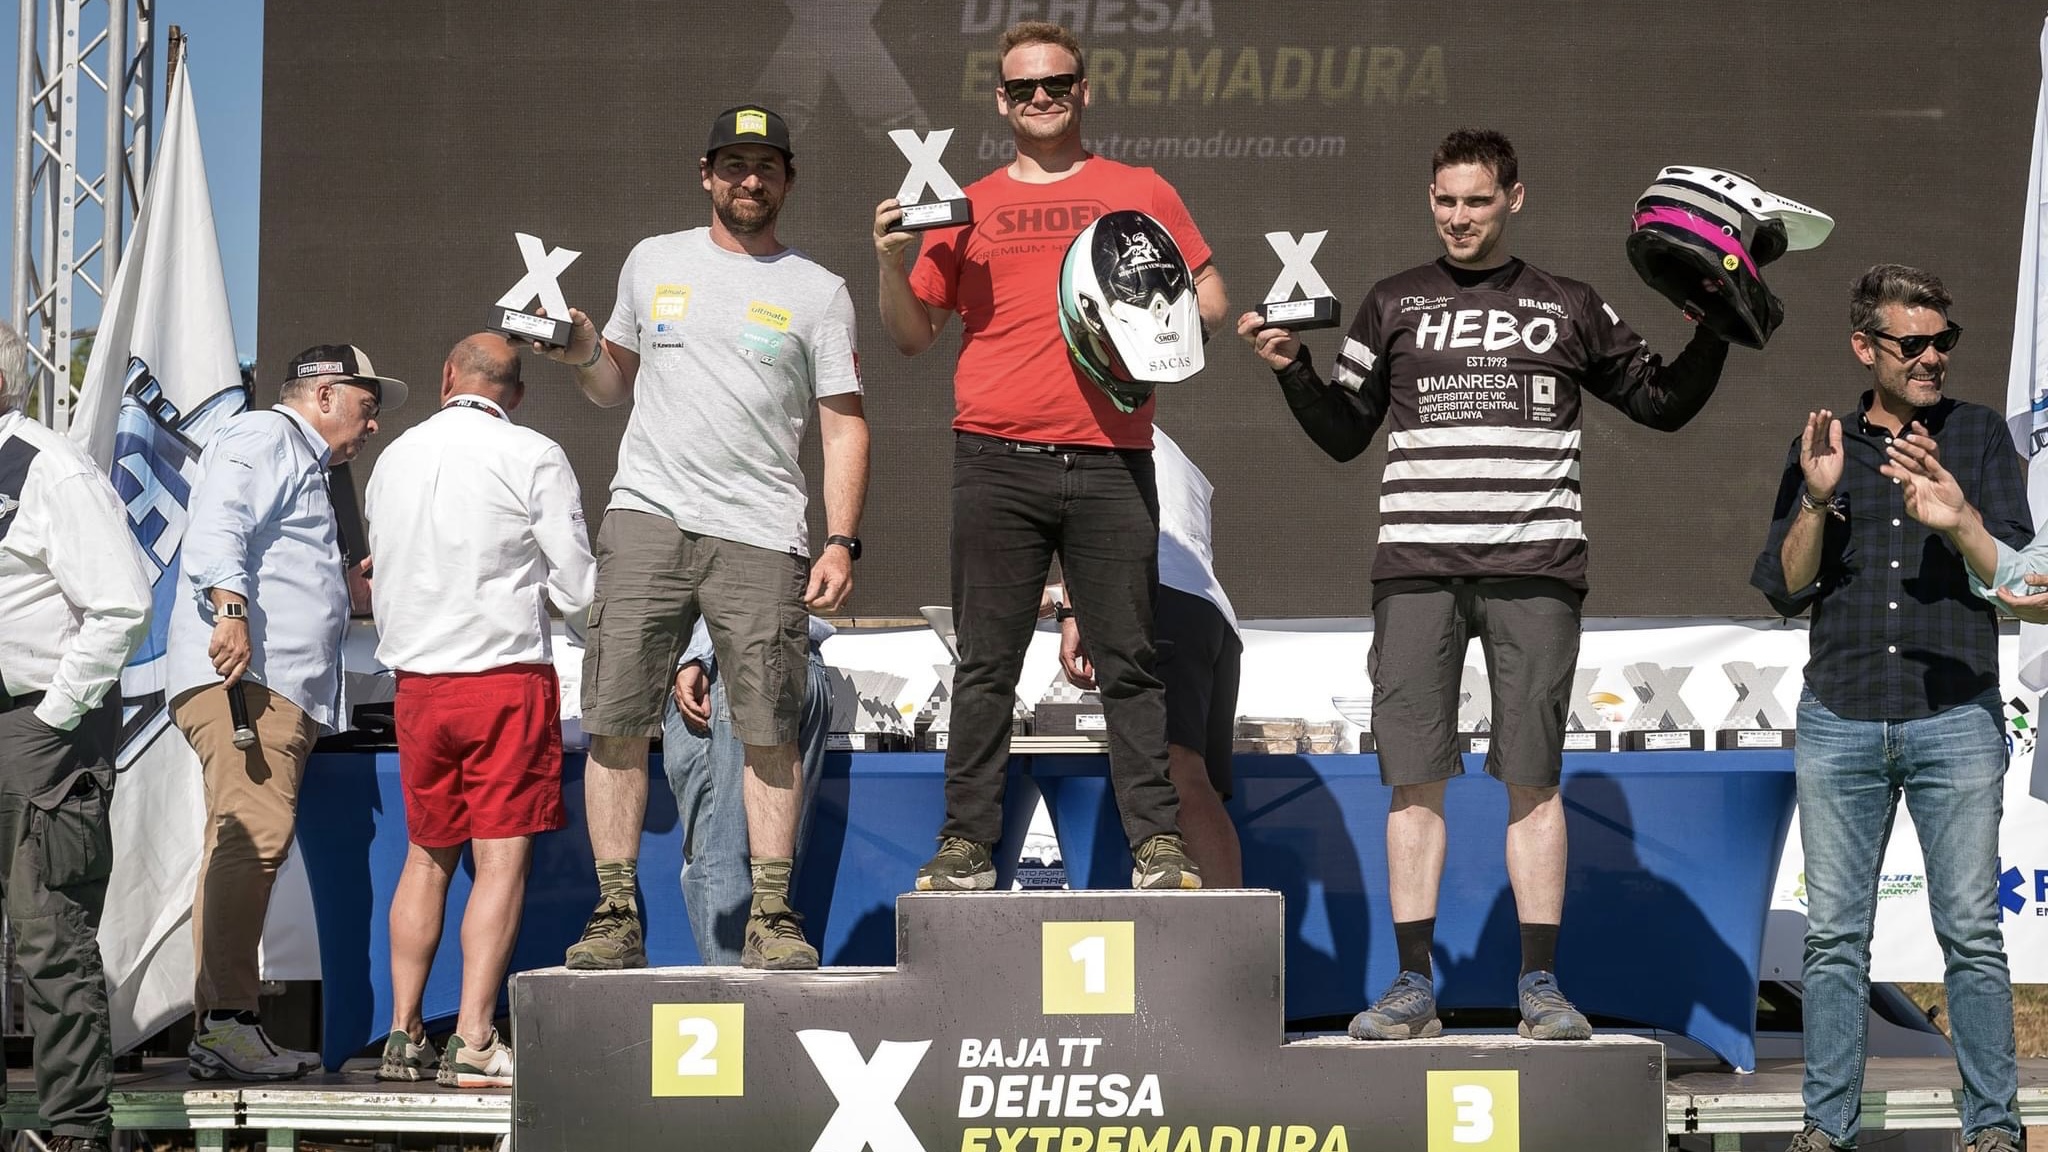 Baja Dehesa Extremadura, Final: Salvador Vargas vence classificação geral! thumbnail